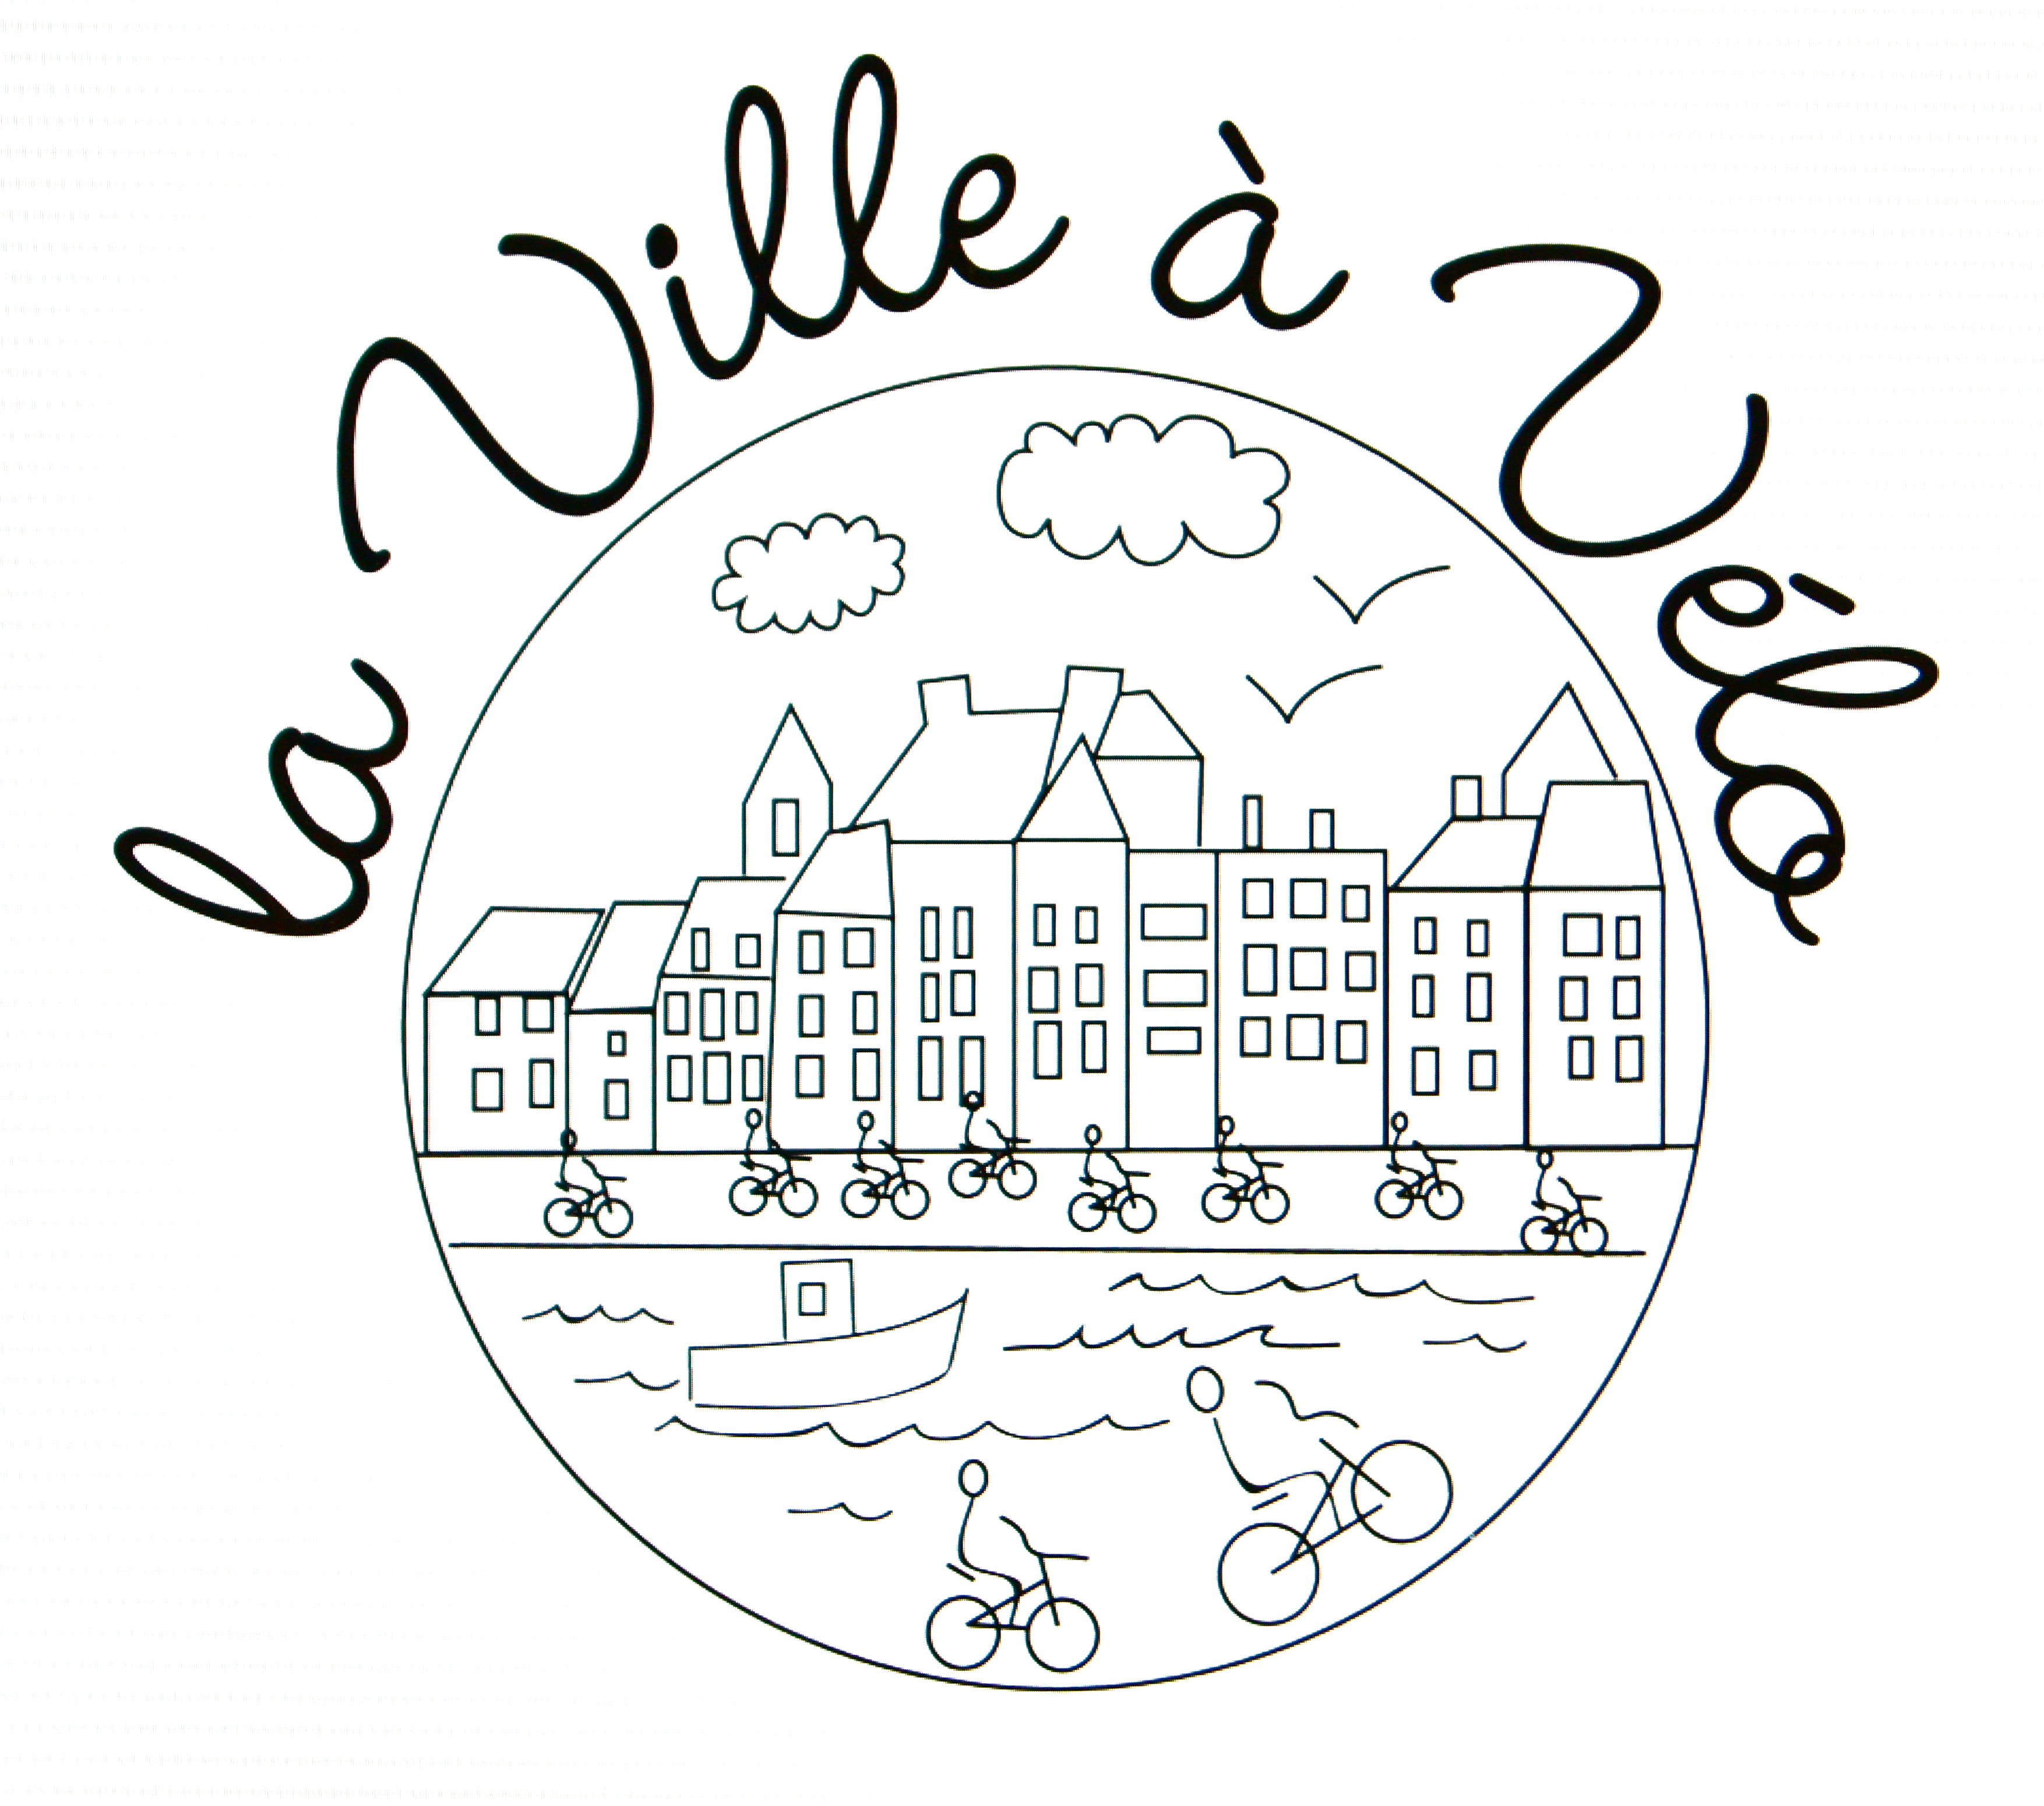 Logo-Ville-a-Velo-1.png